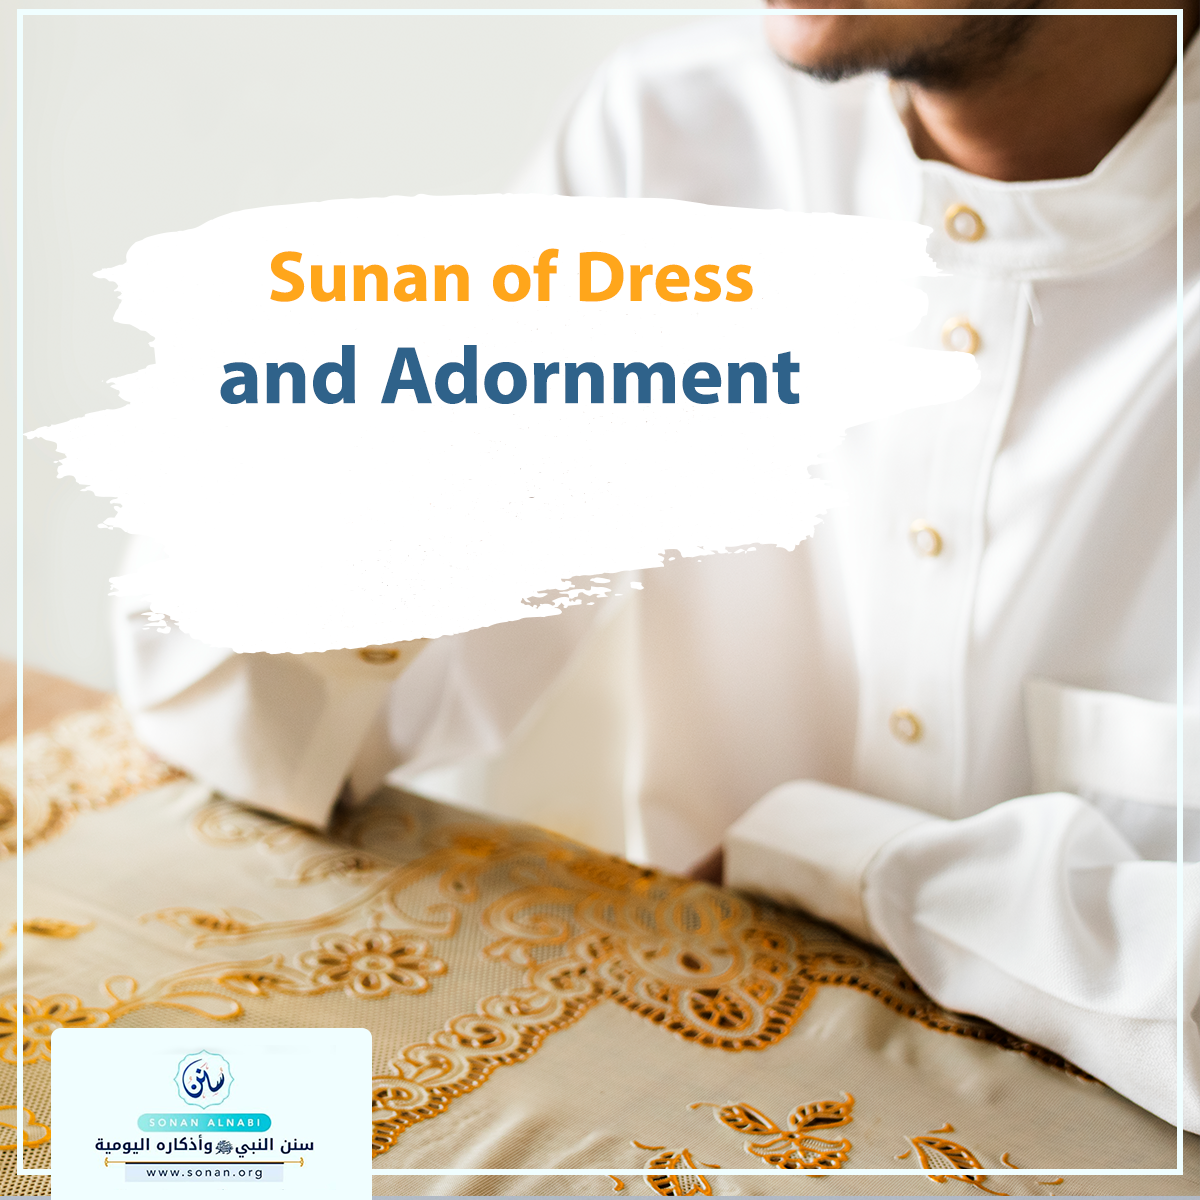 Sunan of Dress and Adornment